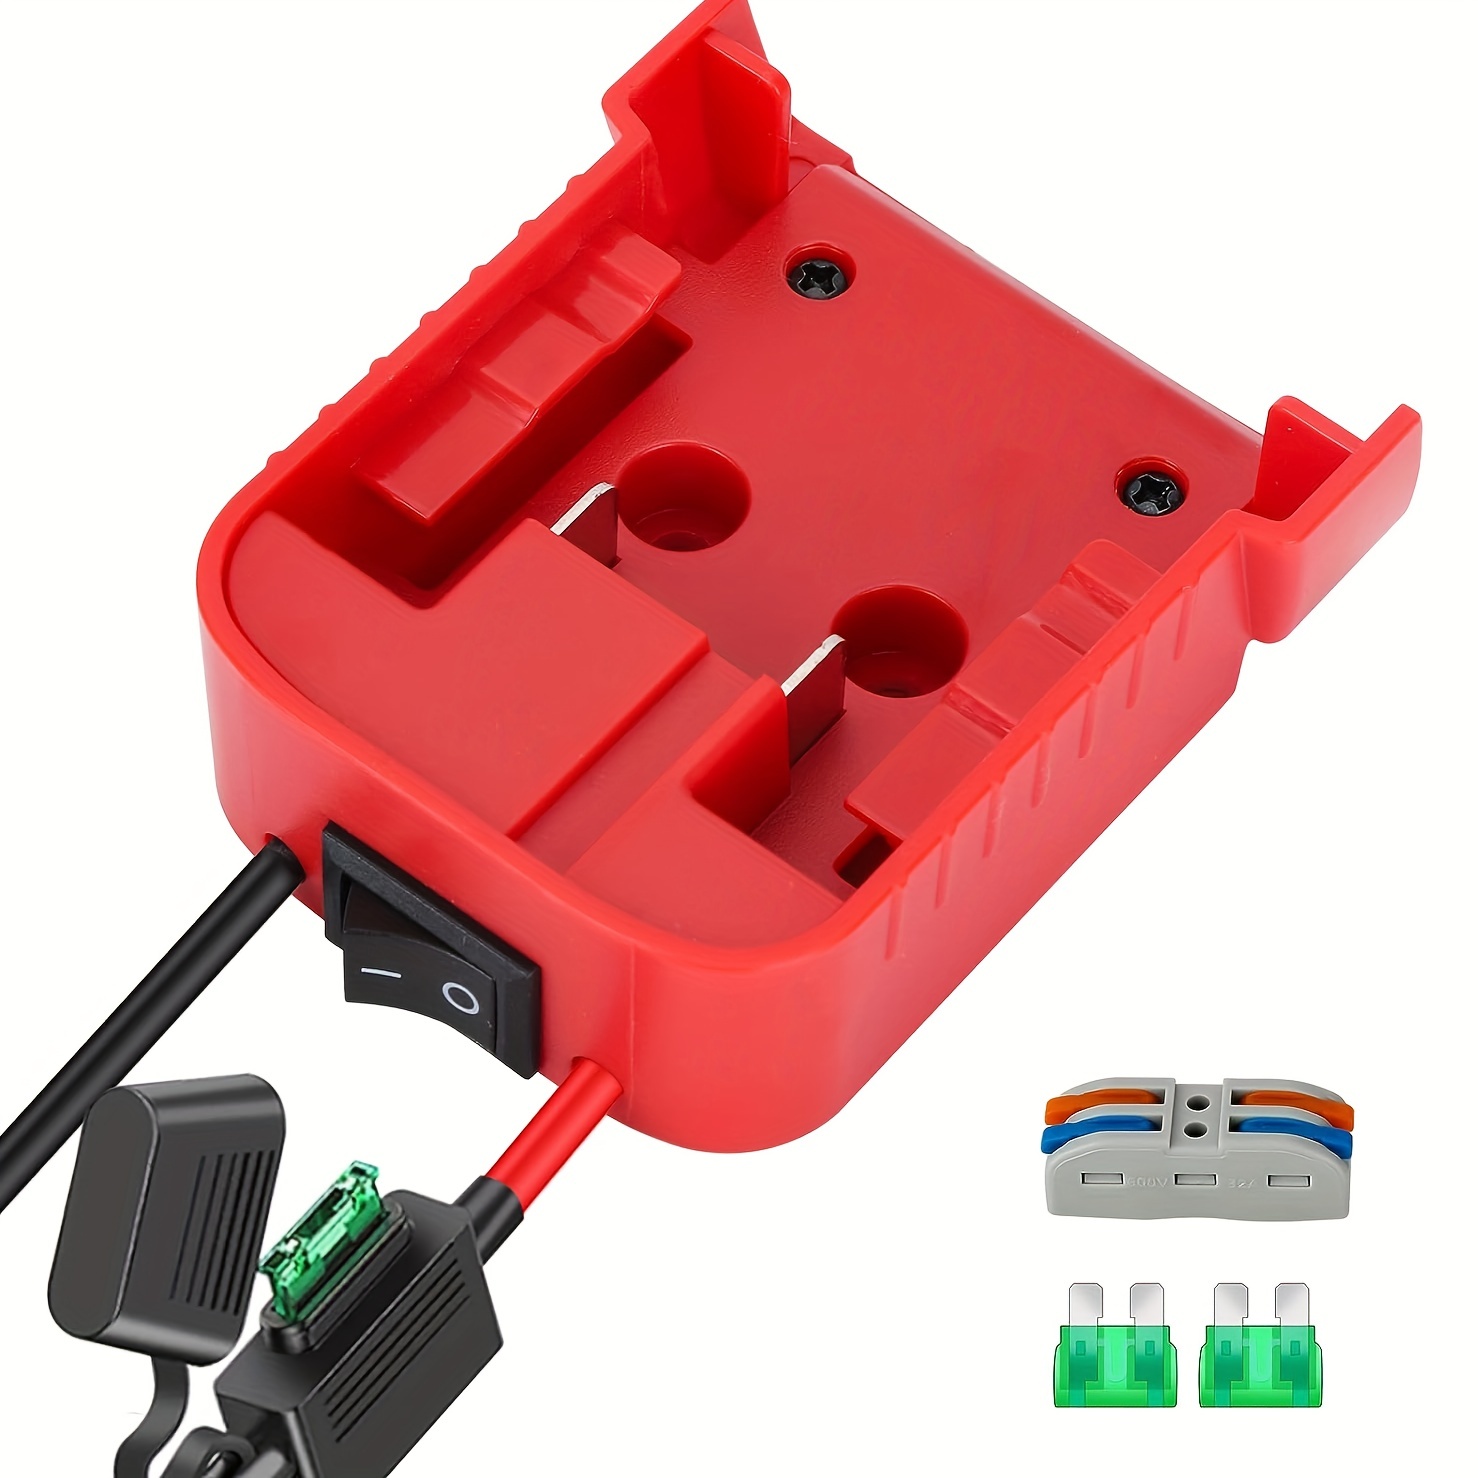 Black & Decker 20V Battery Adapter Holder dock mount w/ Wires for